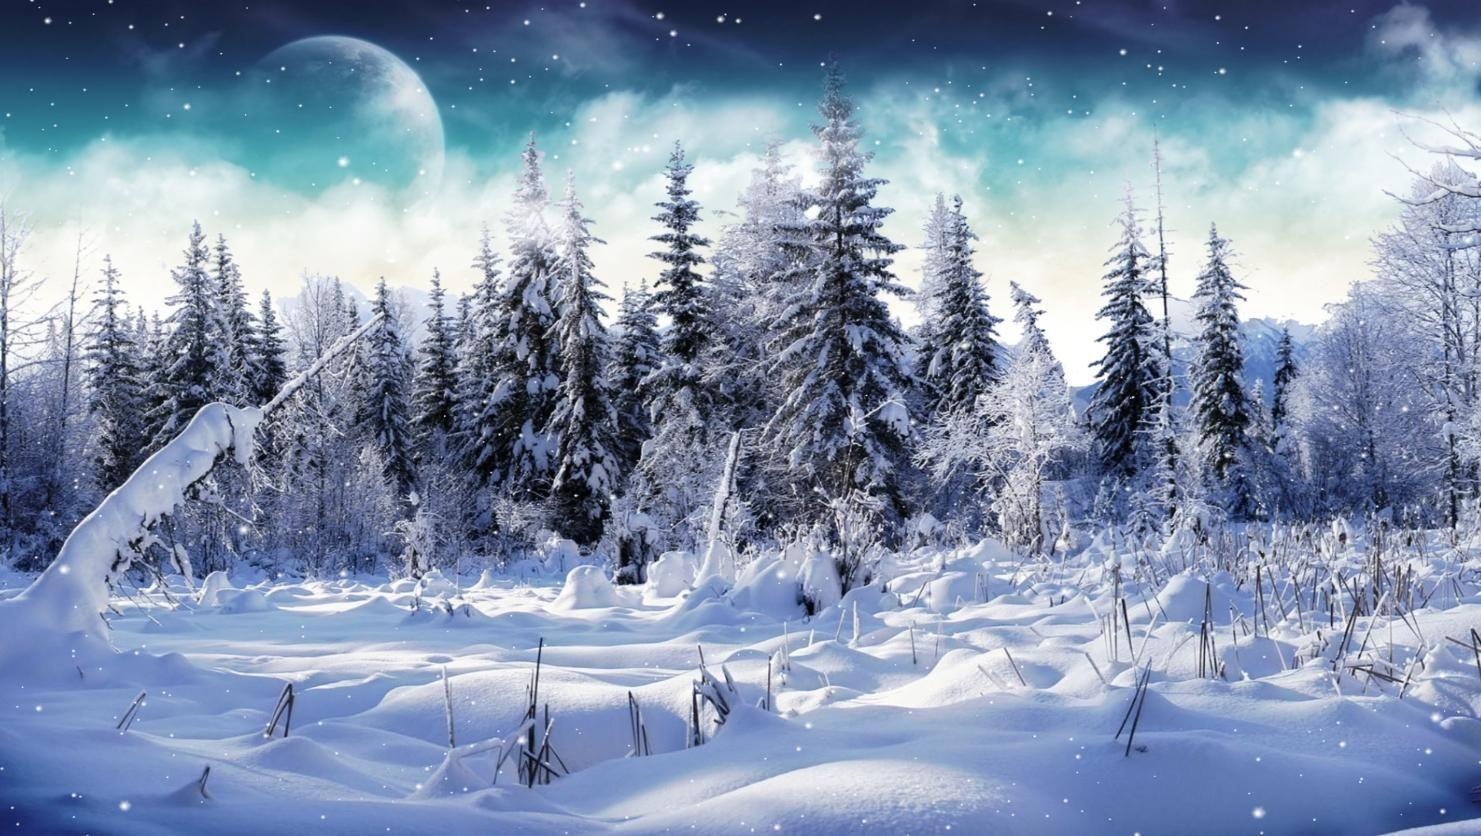 Free Microsoft Winter Scene. Download Cold Winter Animated Wallpaper. DesktopAnimated.com. Winter scenery, Winter landscape, Winter wallpaper